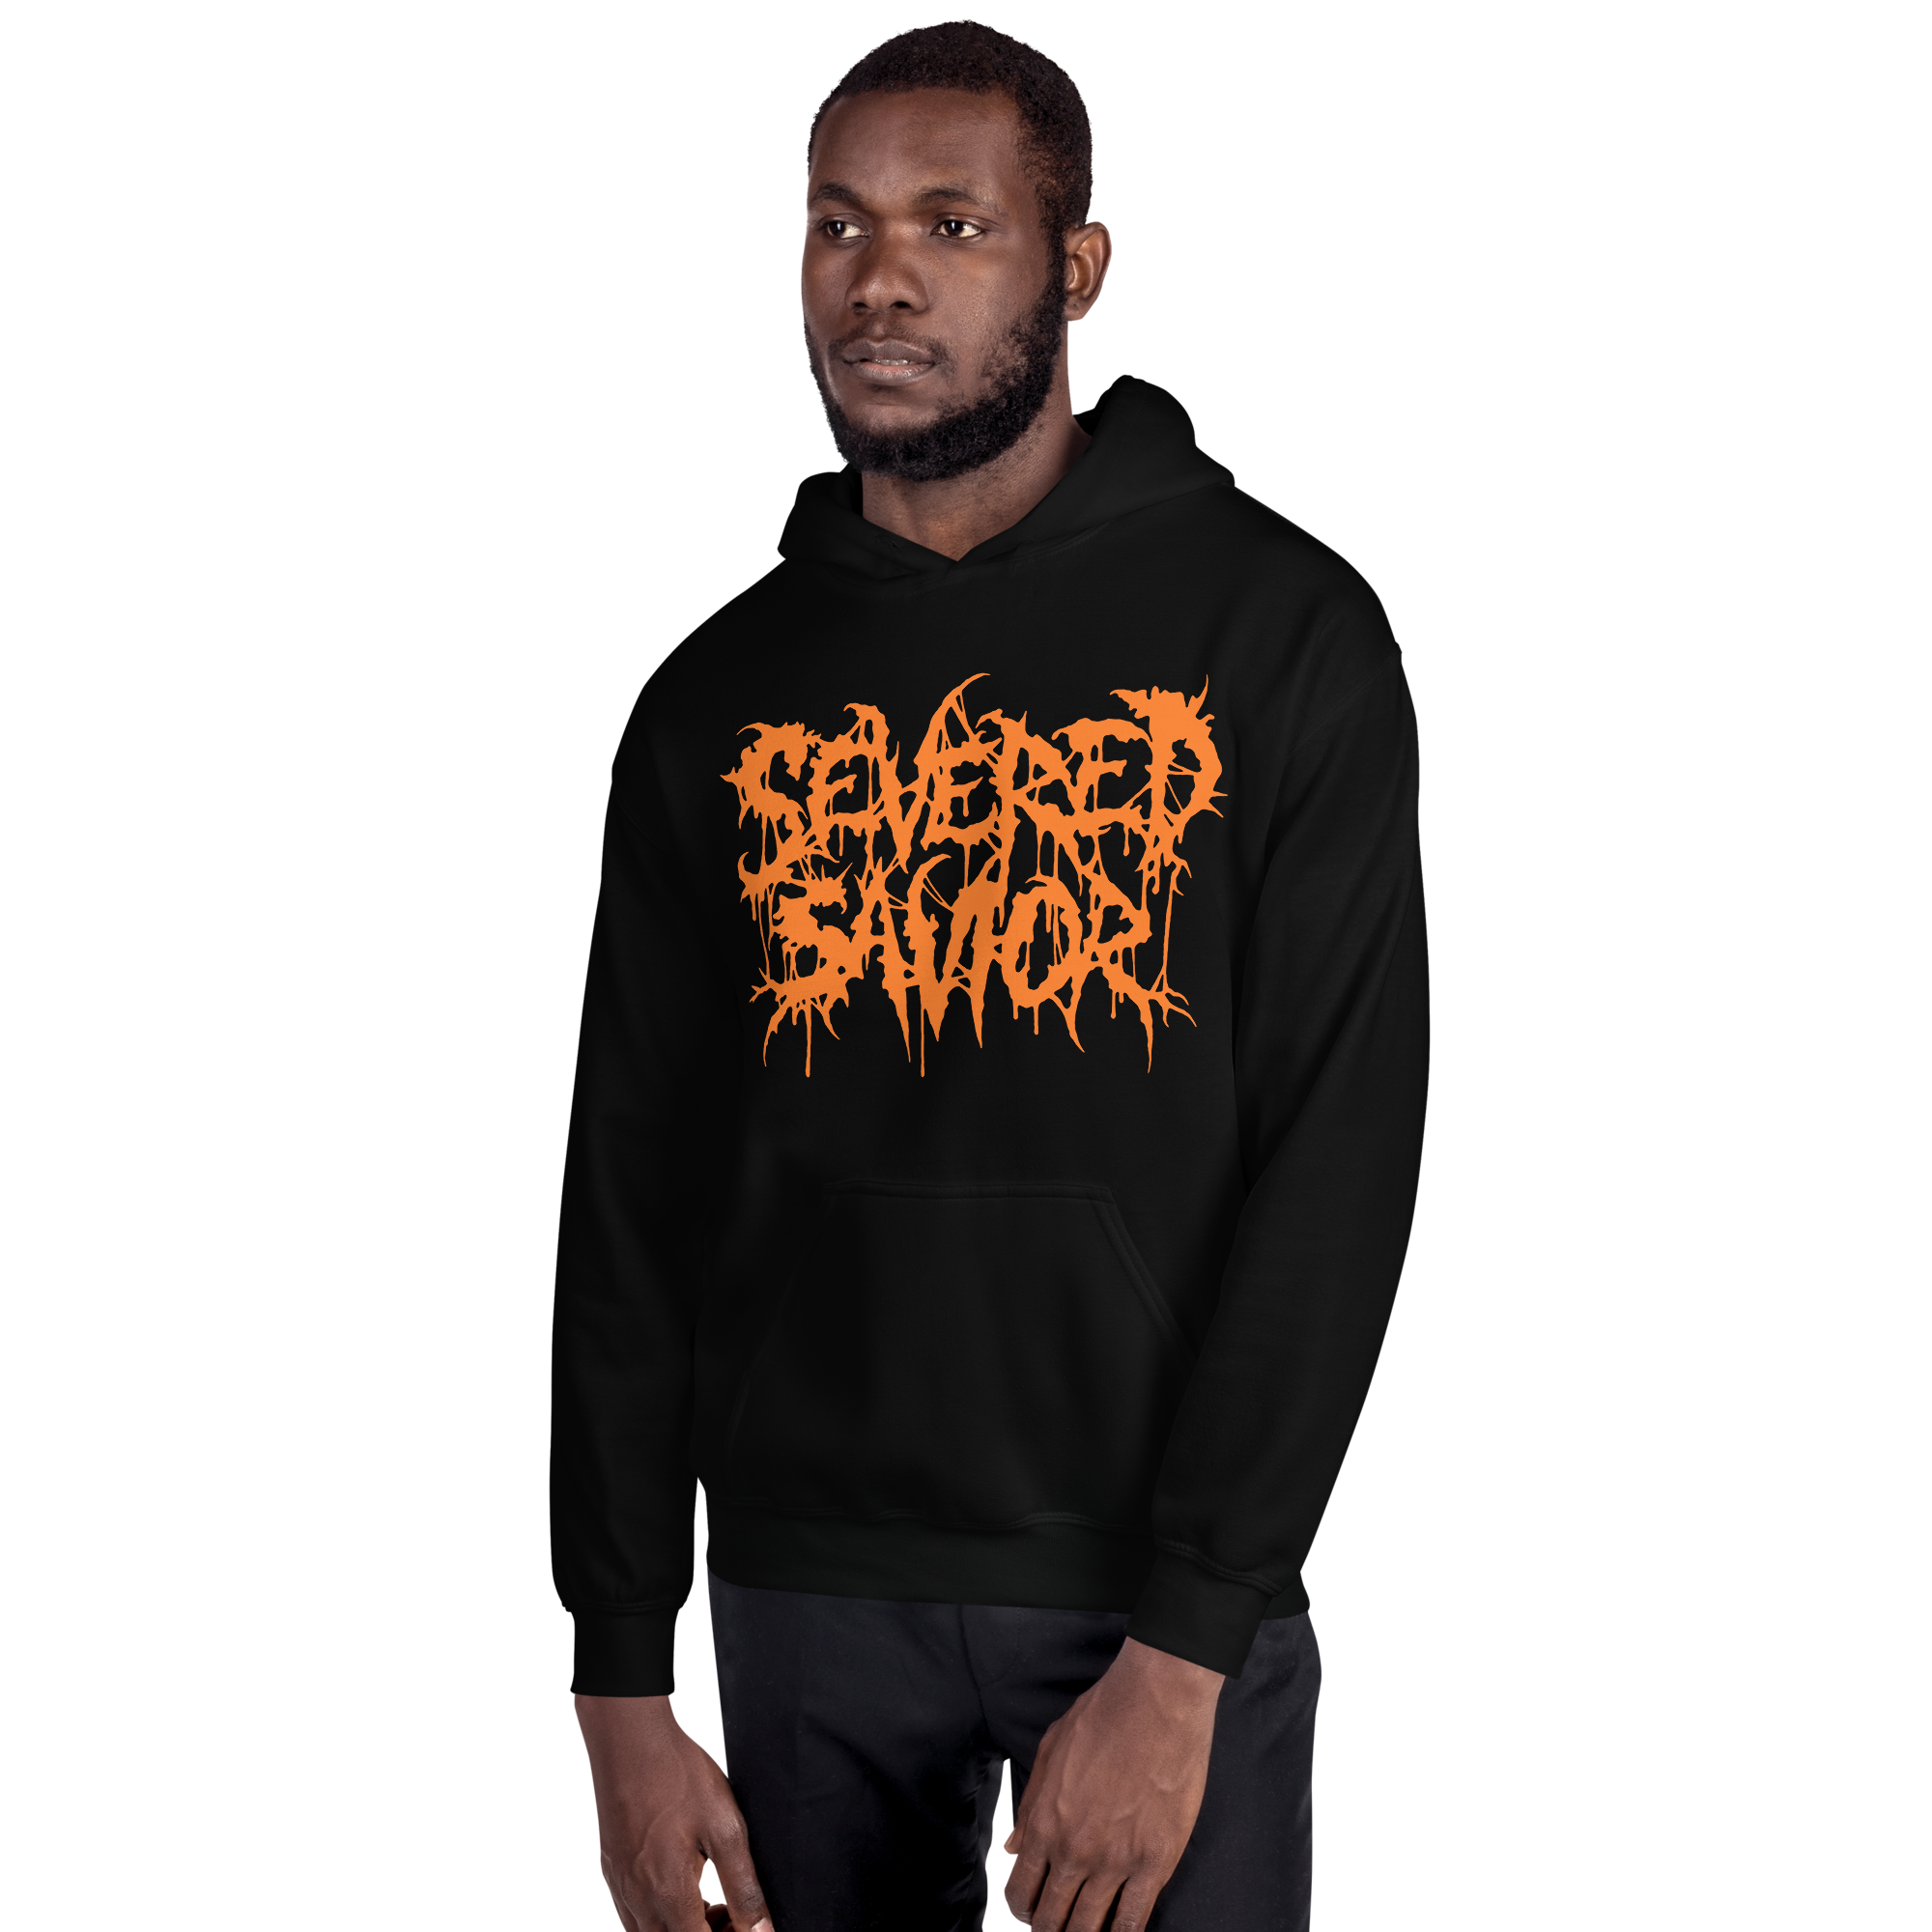 Severed Savior Logo Pullover Hoodie - Orange